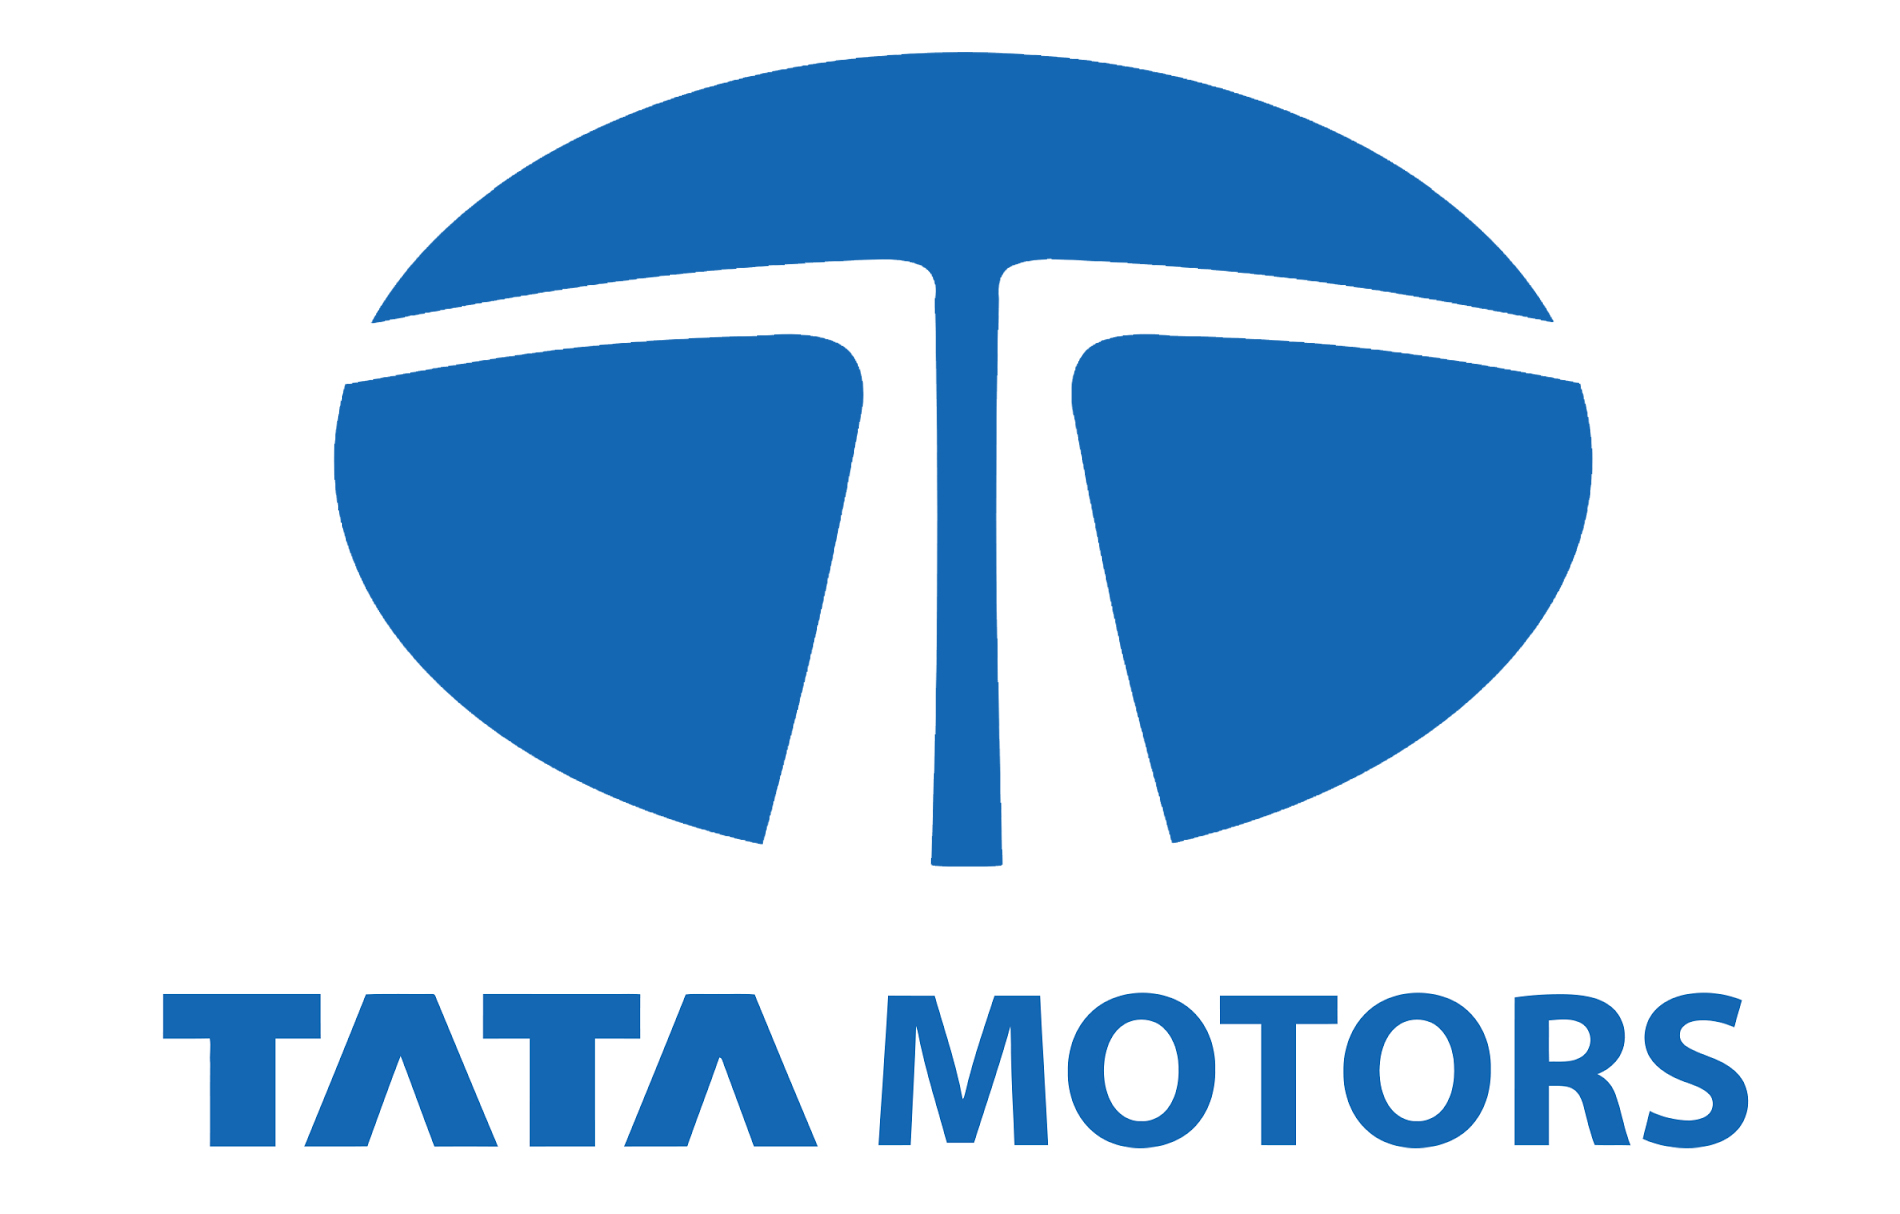 Tata Motors Cars Showroom - Princely Cars Pvt Ltd Logo